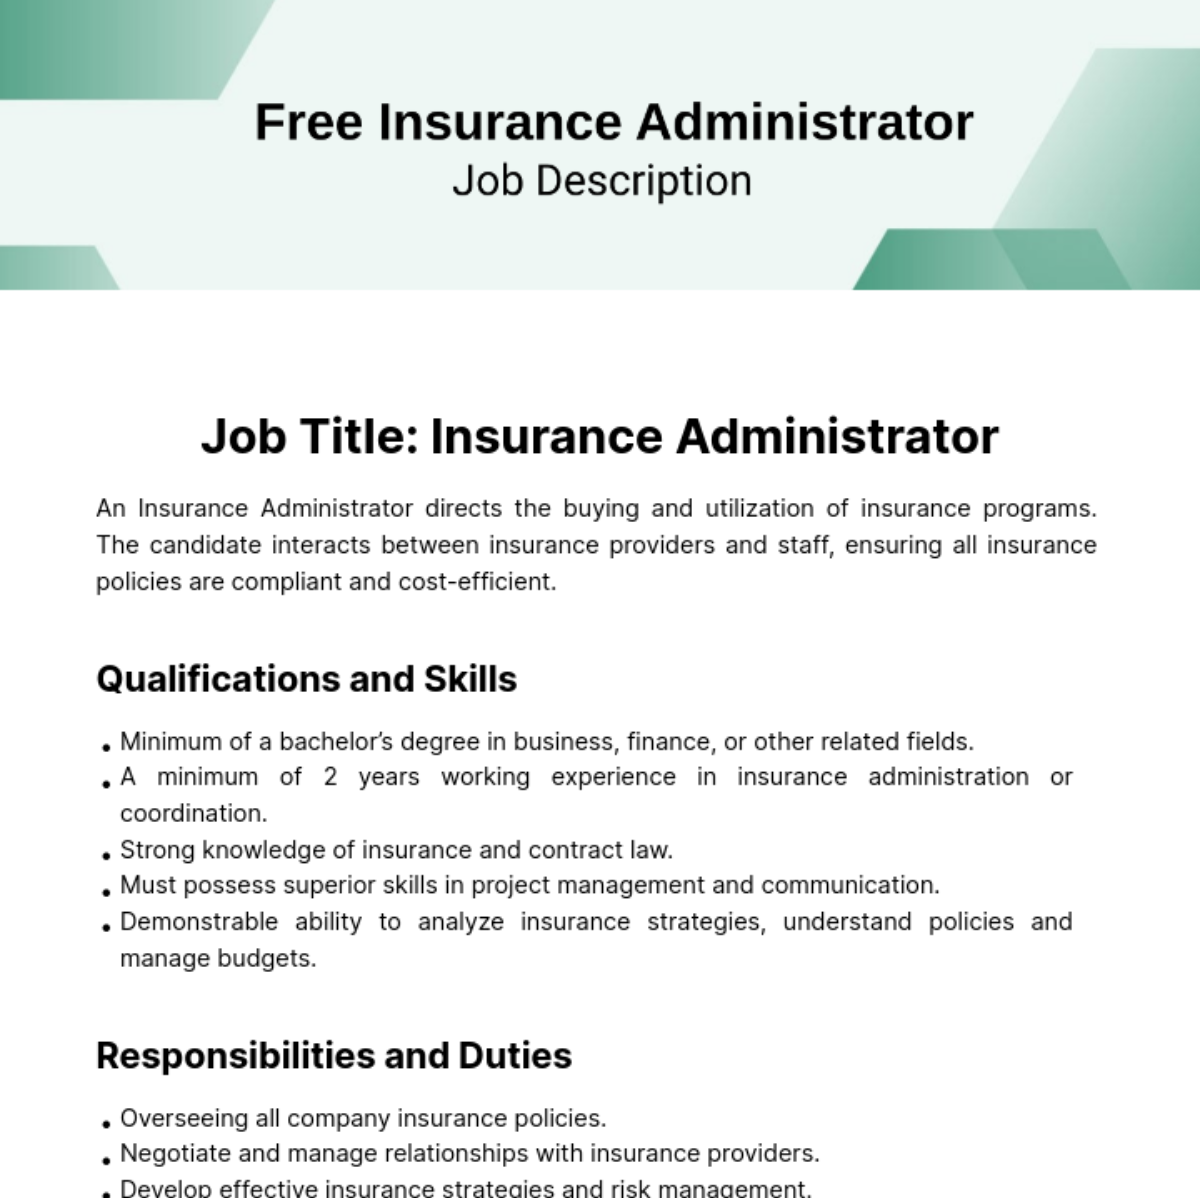 Free Insurance Administrator Job Description Template